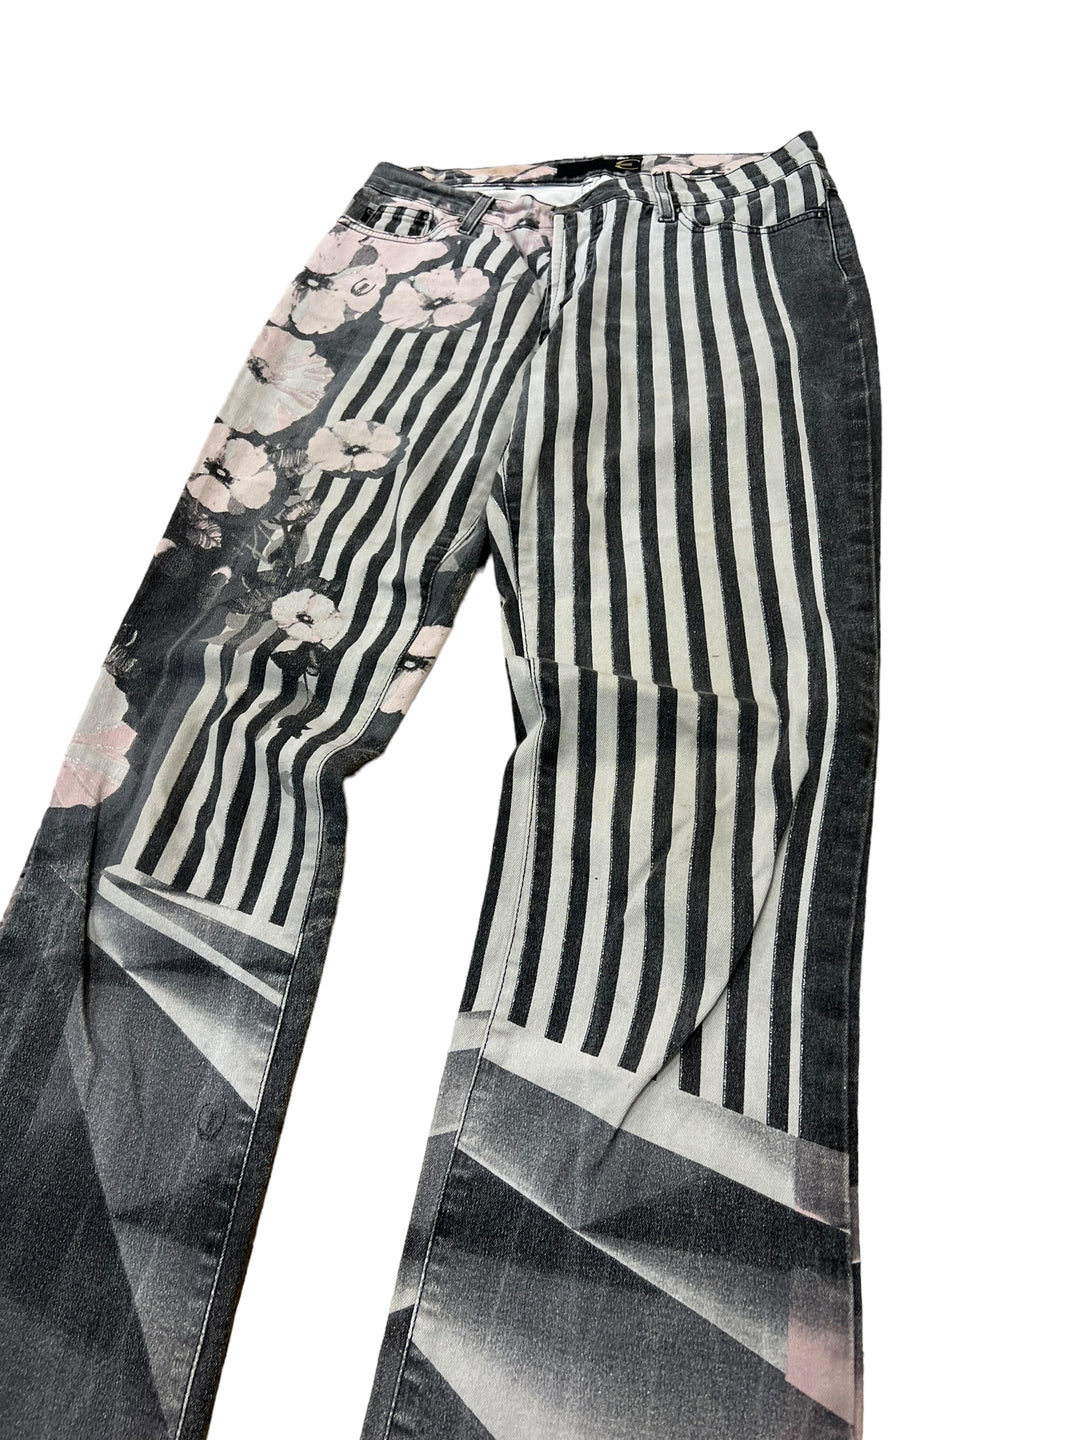 JUST CAVALLI y2k stripes floral jeans women’s medium(38/40)